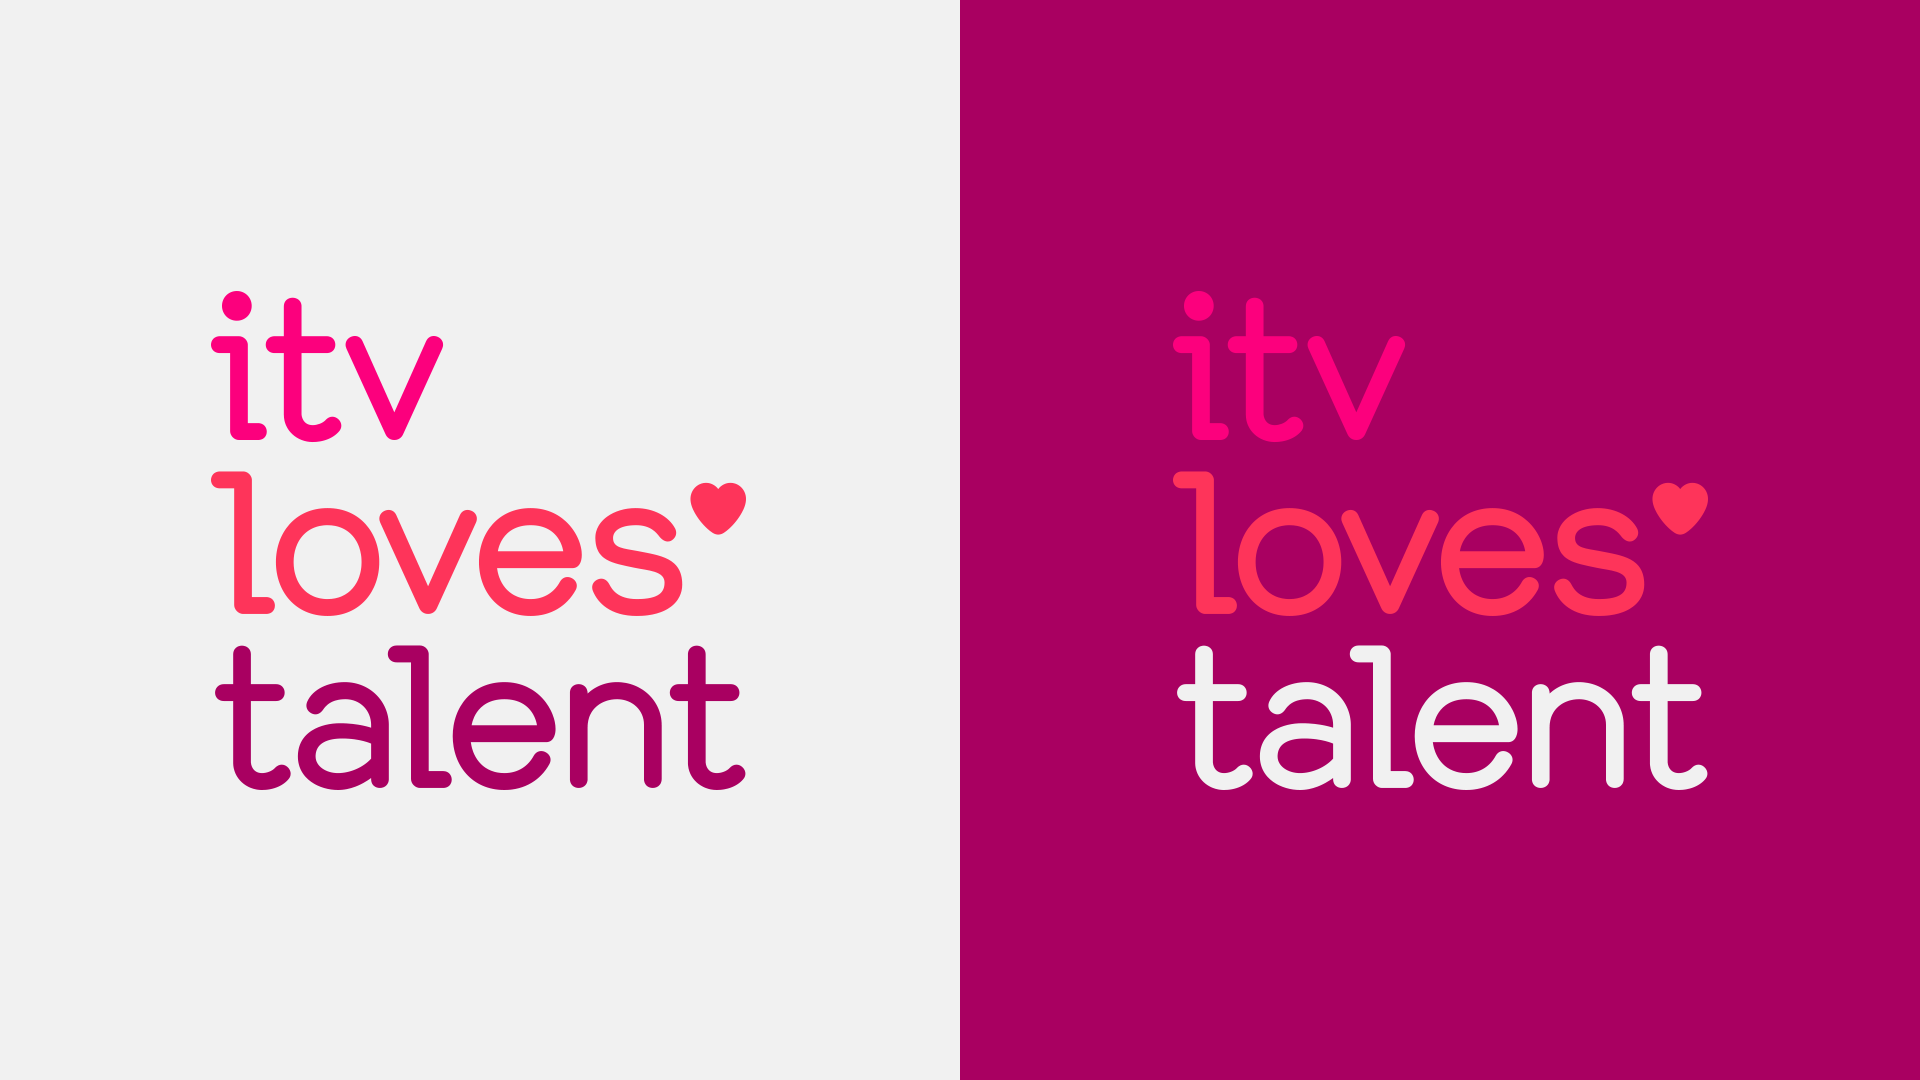 Jason Ford - ITV Loves Talent Stacked Logos